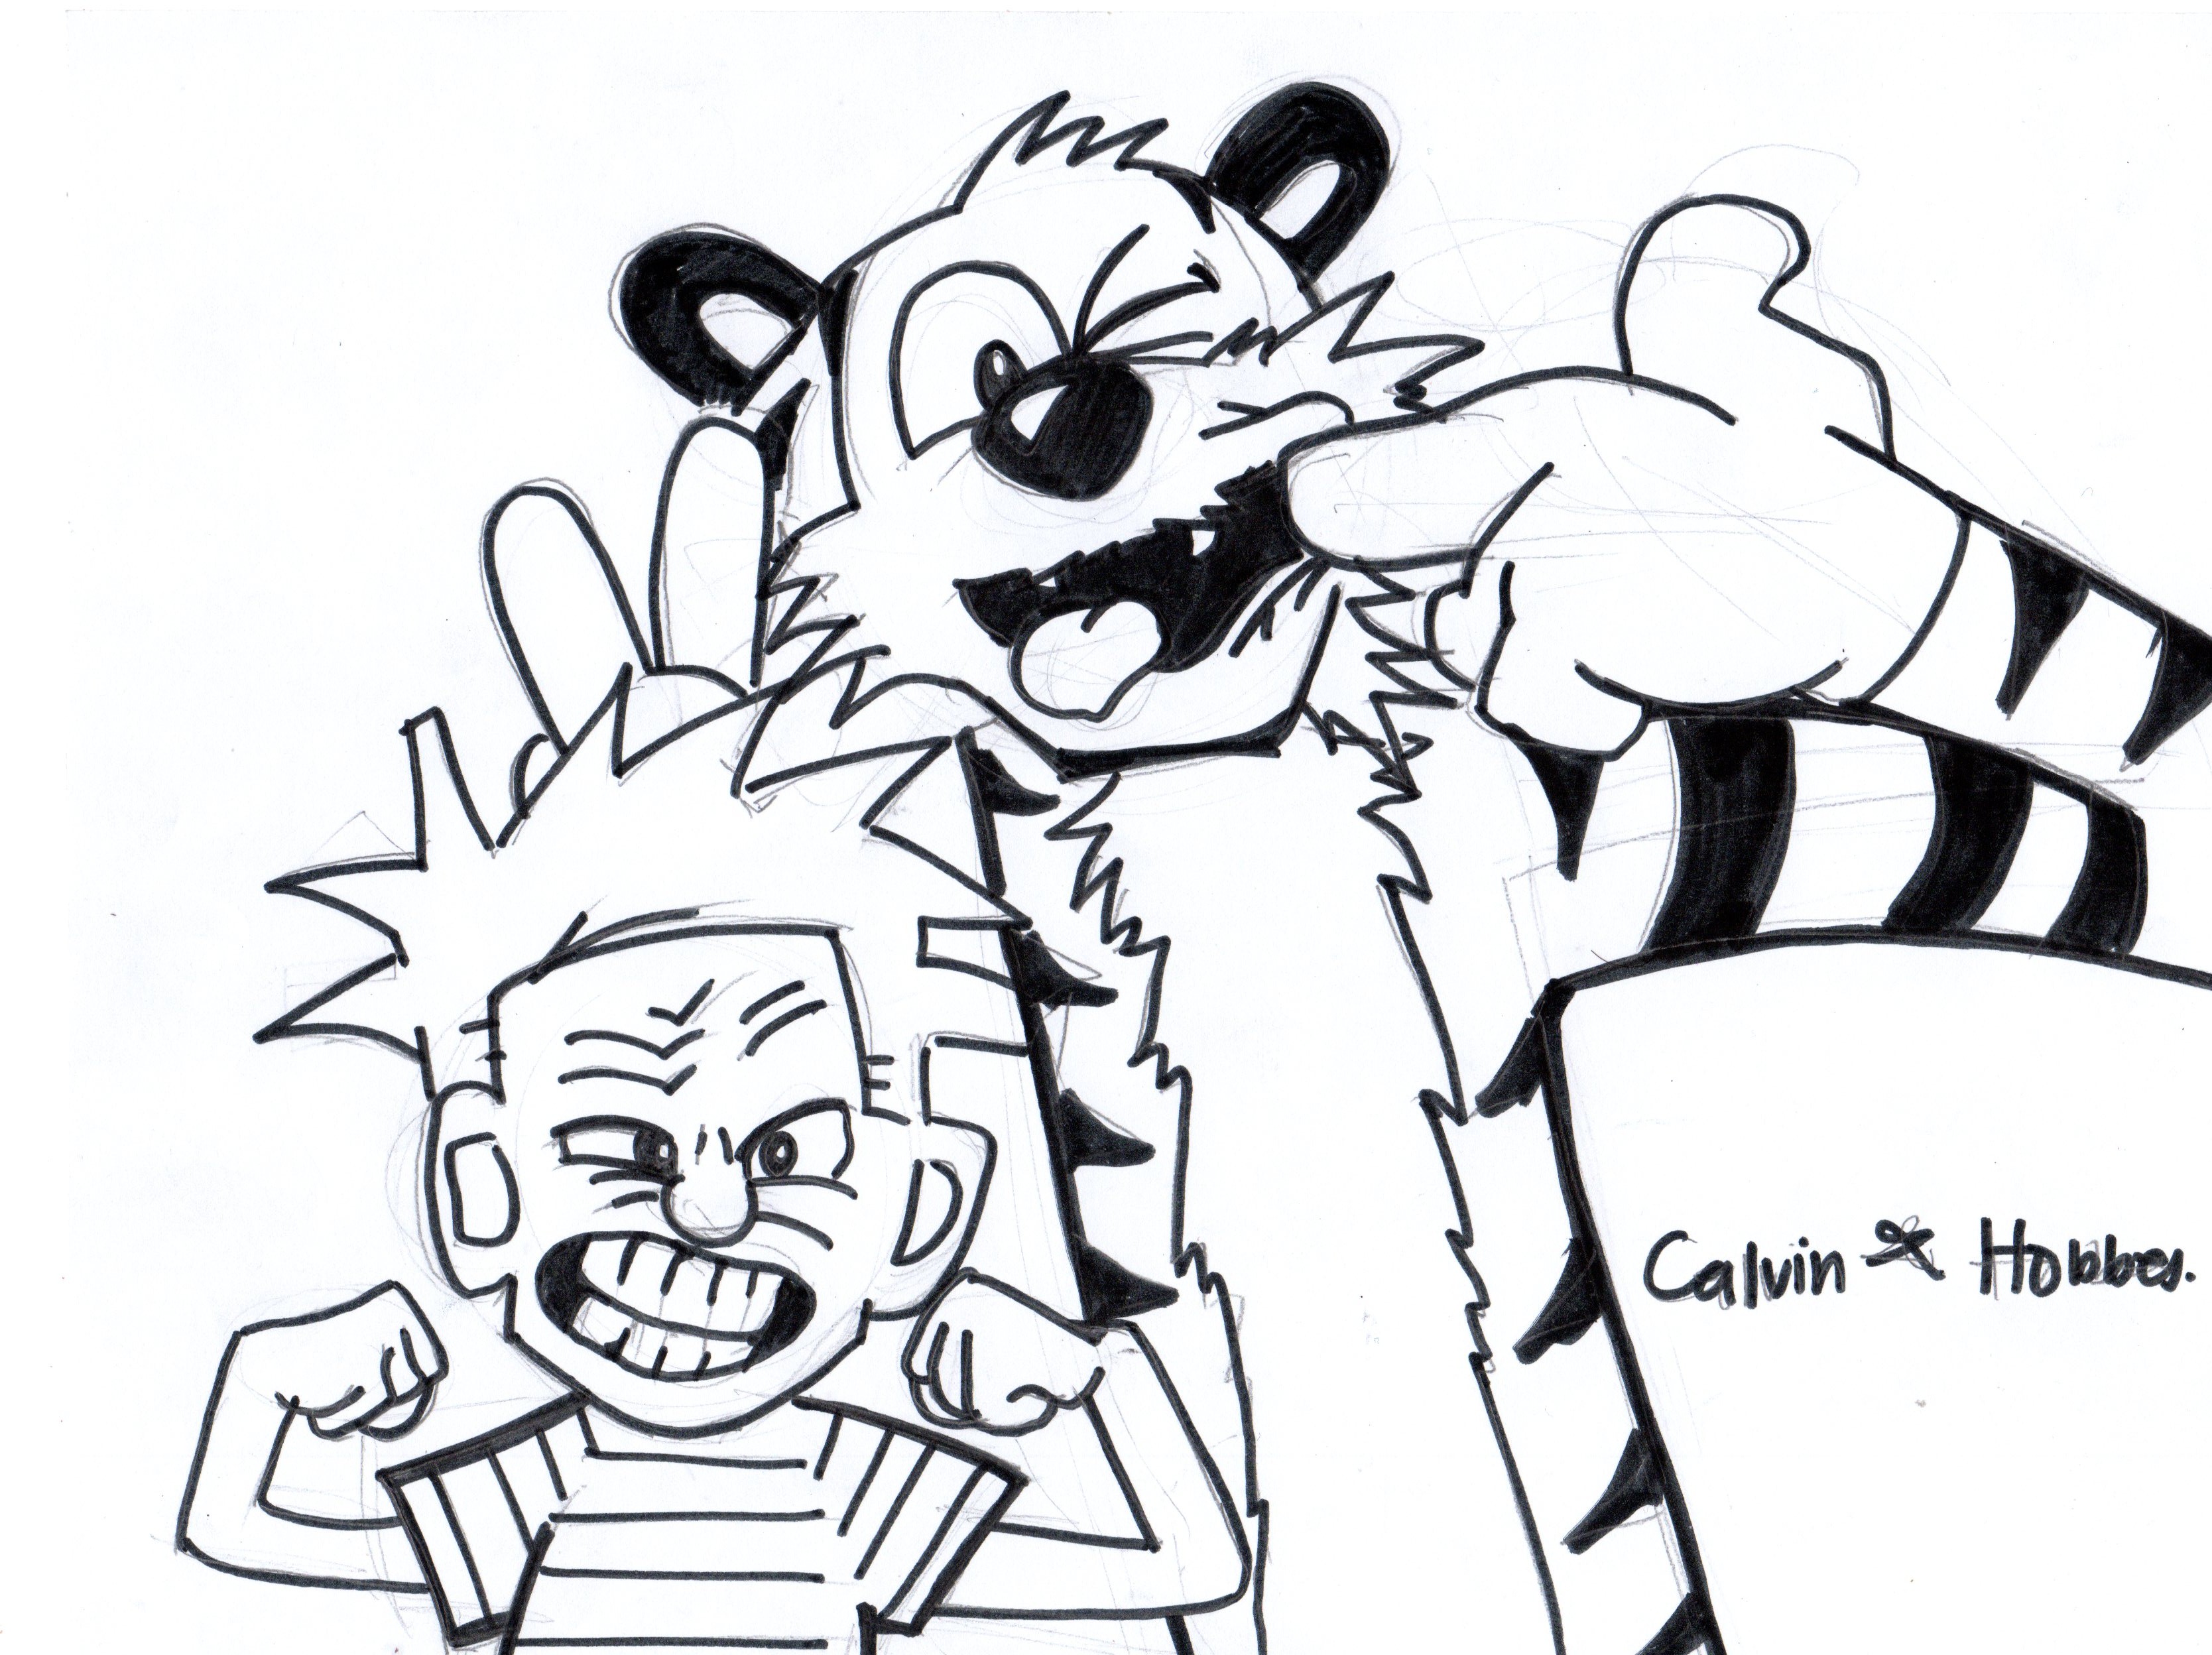 Calvin and Hobbes (Cartoon / Sketch) | Jesse Talks